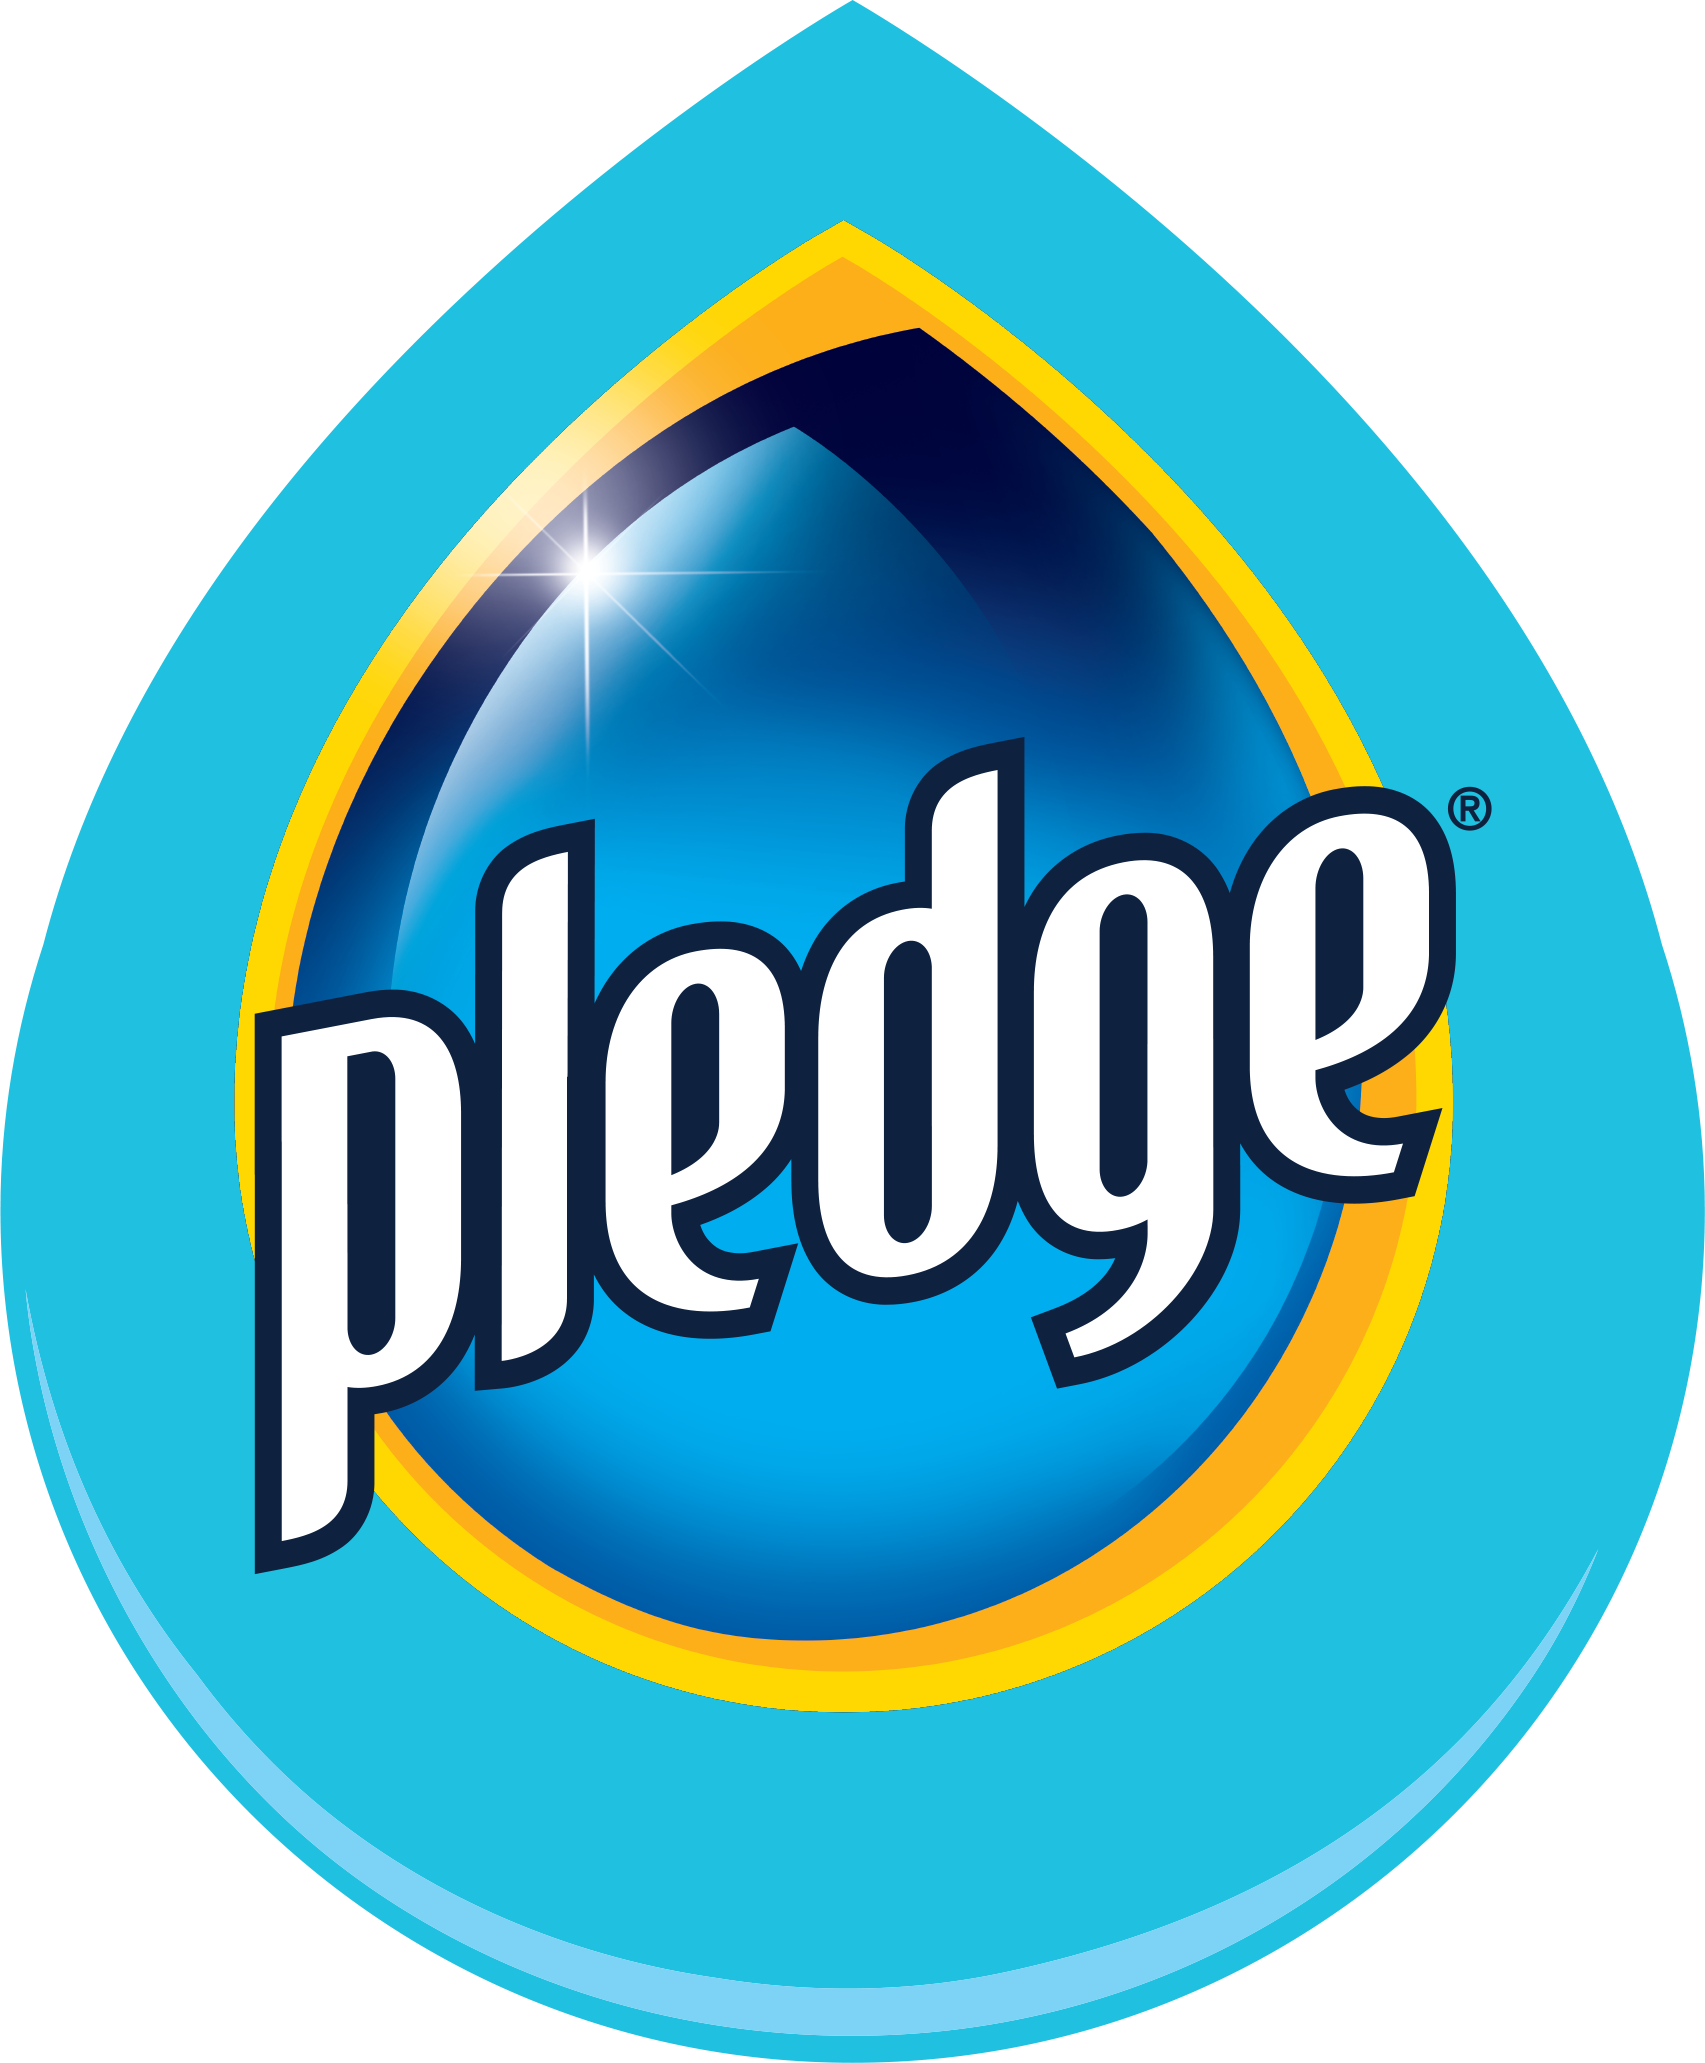 A blue Pledge logo.